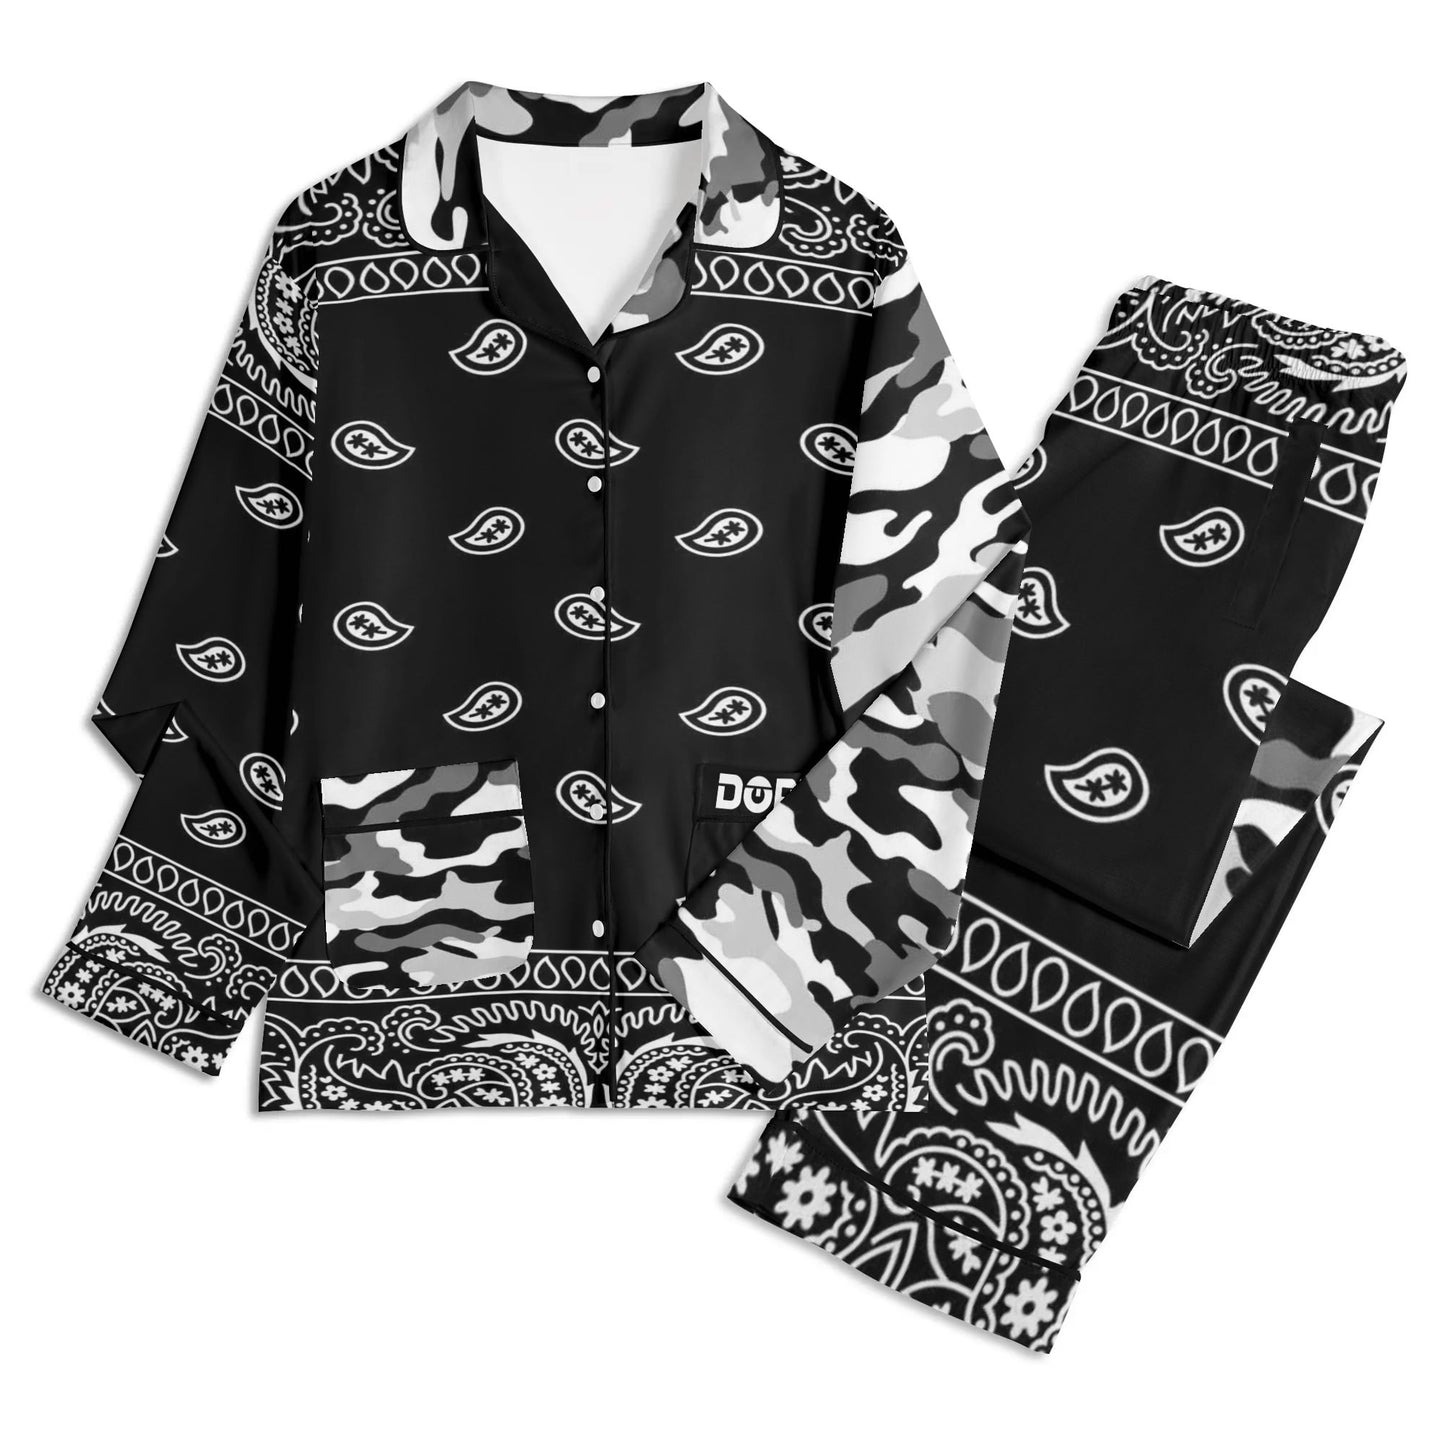 Unisex Camo Bandana G. Long Sleeve Adult Nightwear Pajama Set